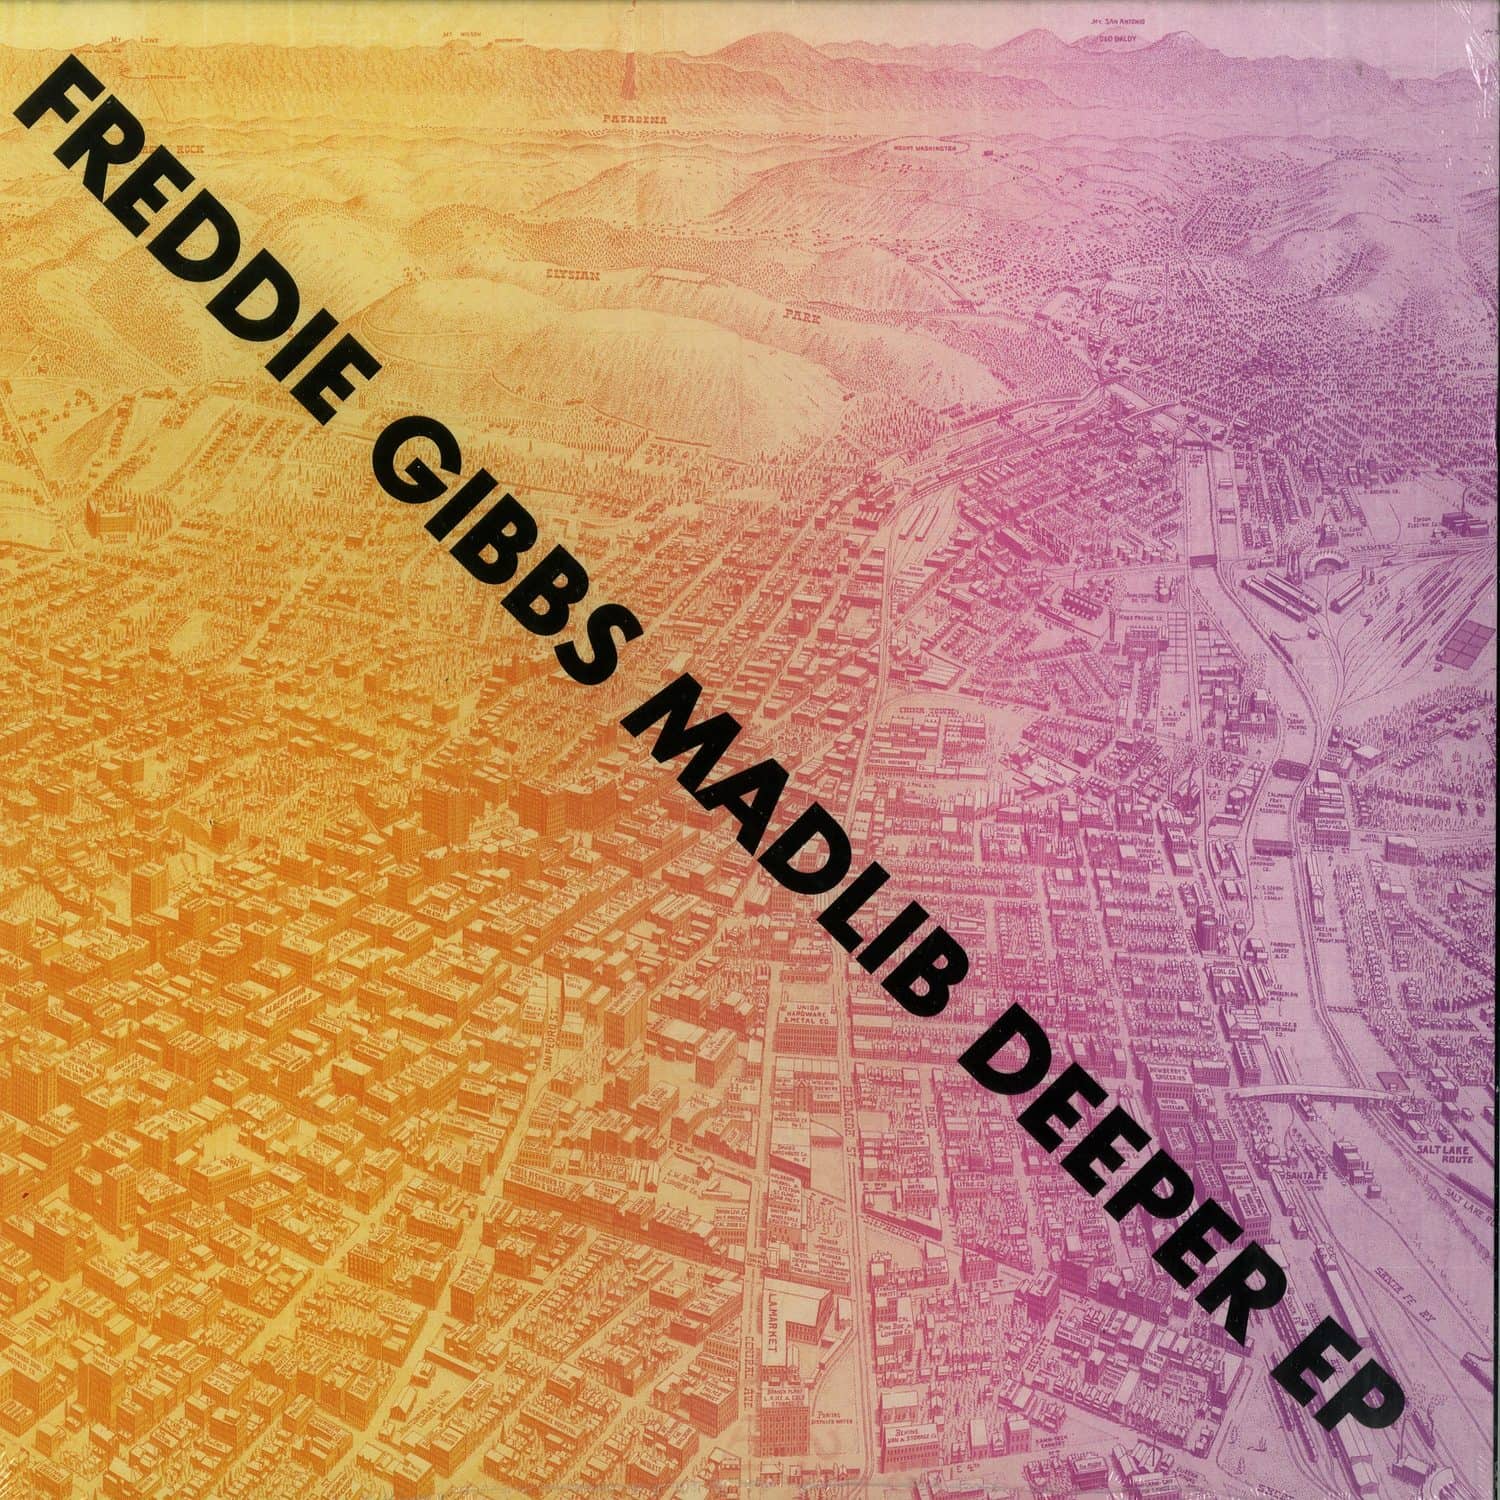 Freddie Gibbs & Madlib - DEEPER EP